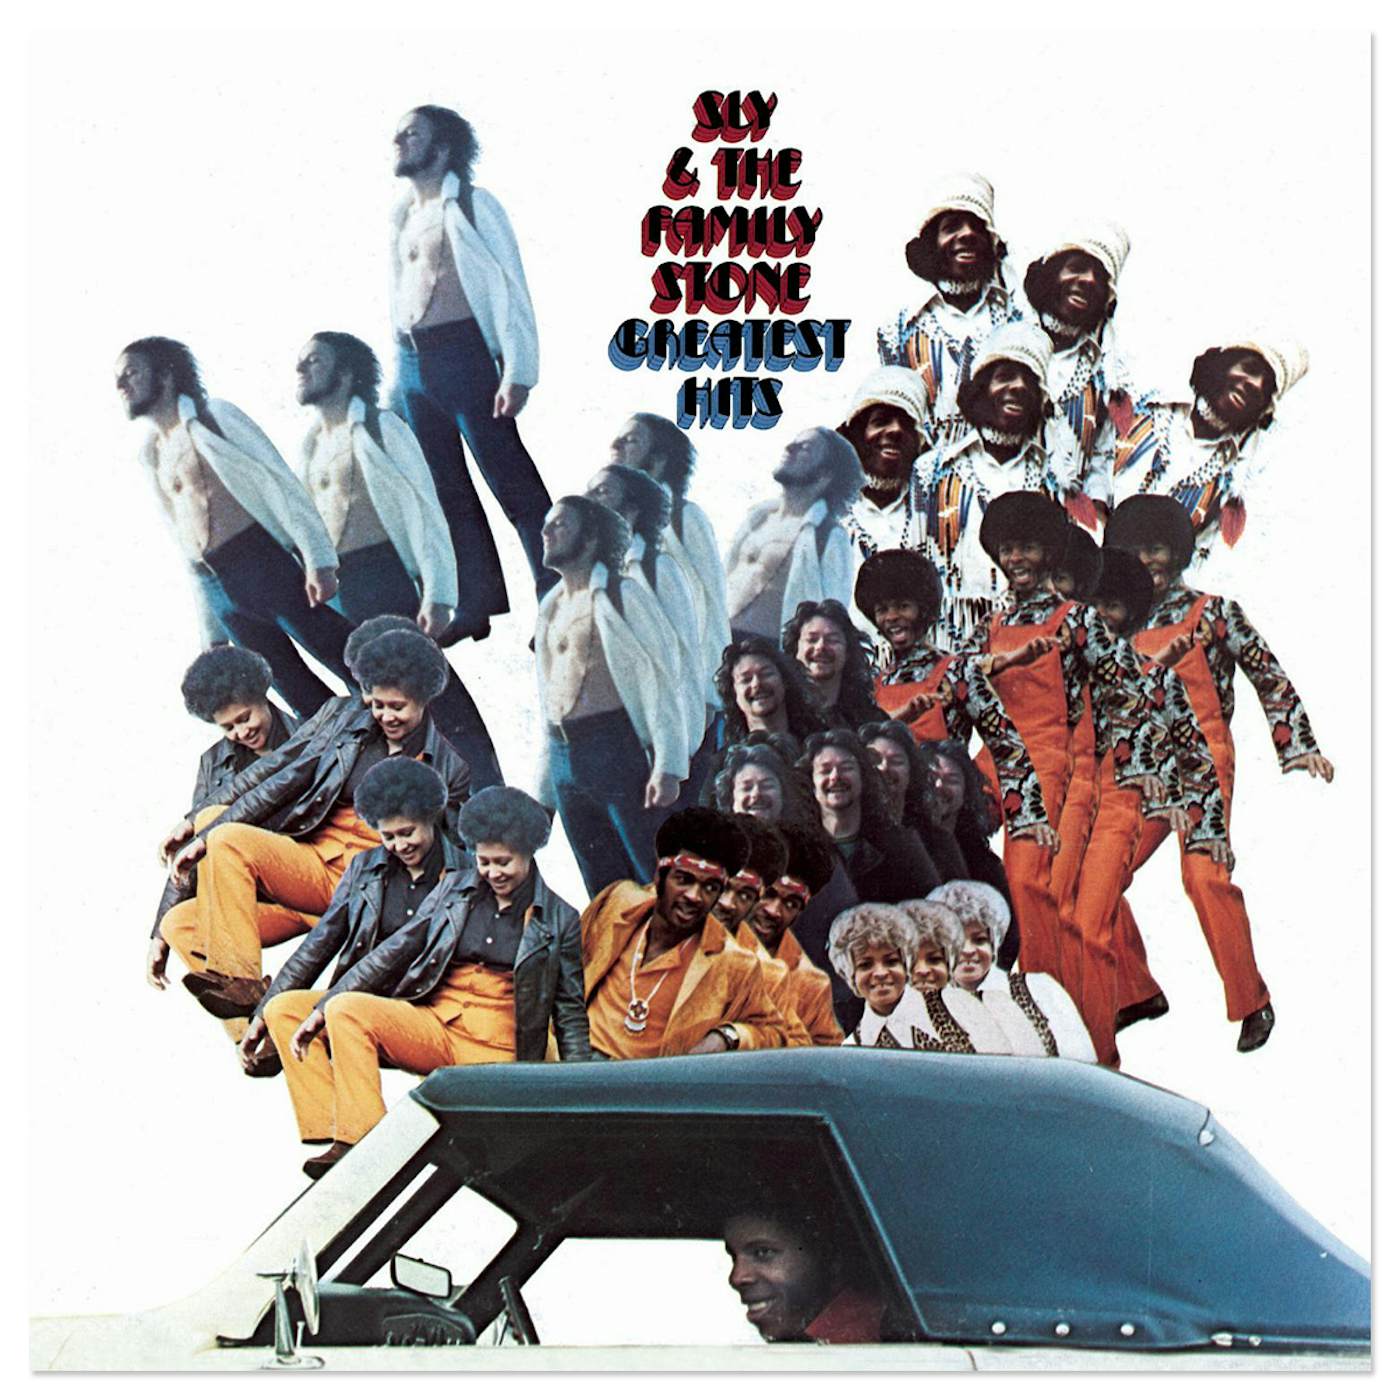 Sly & The Family Stone Greatest Hits CD